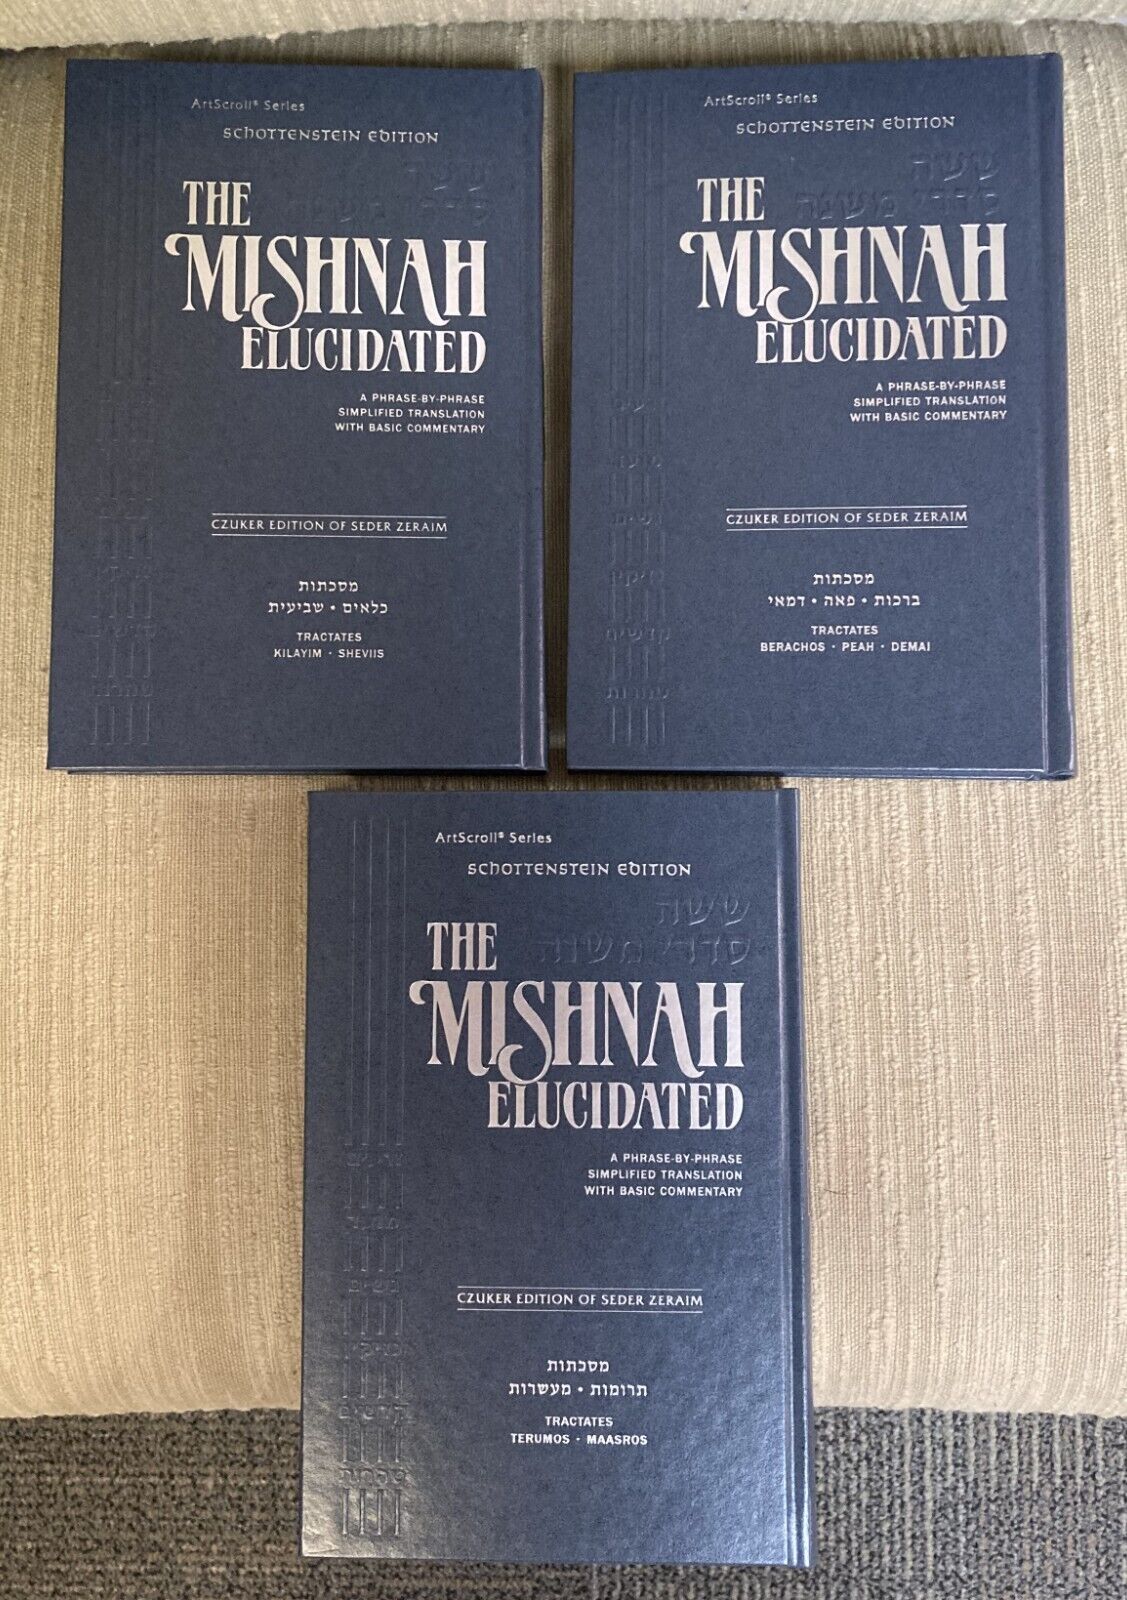 LOT OF 3 Schottenstein Edition of the Mishnah Elucidated, ArtScroll, Judaism